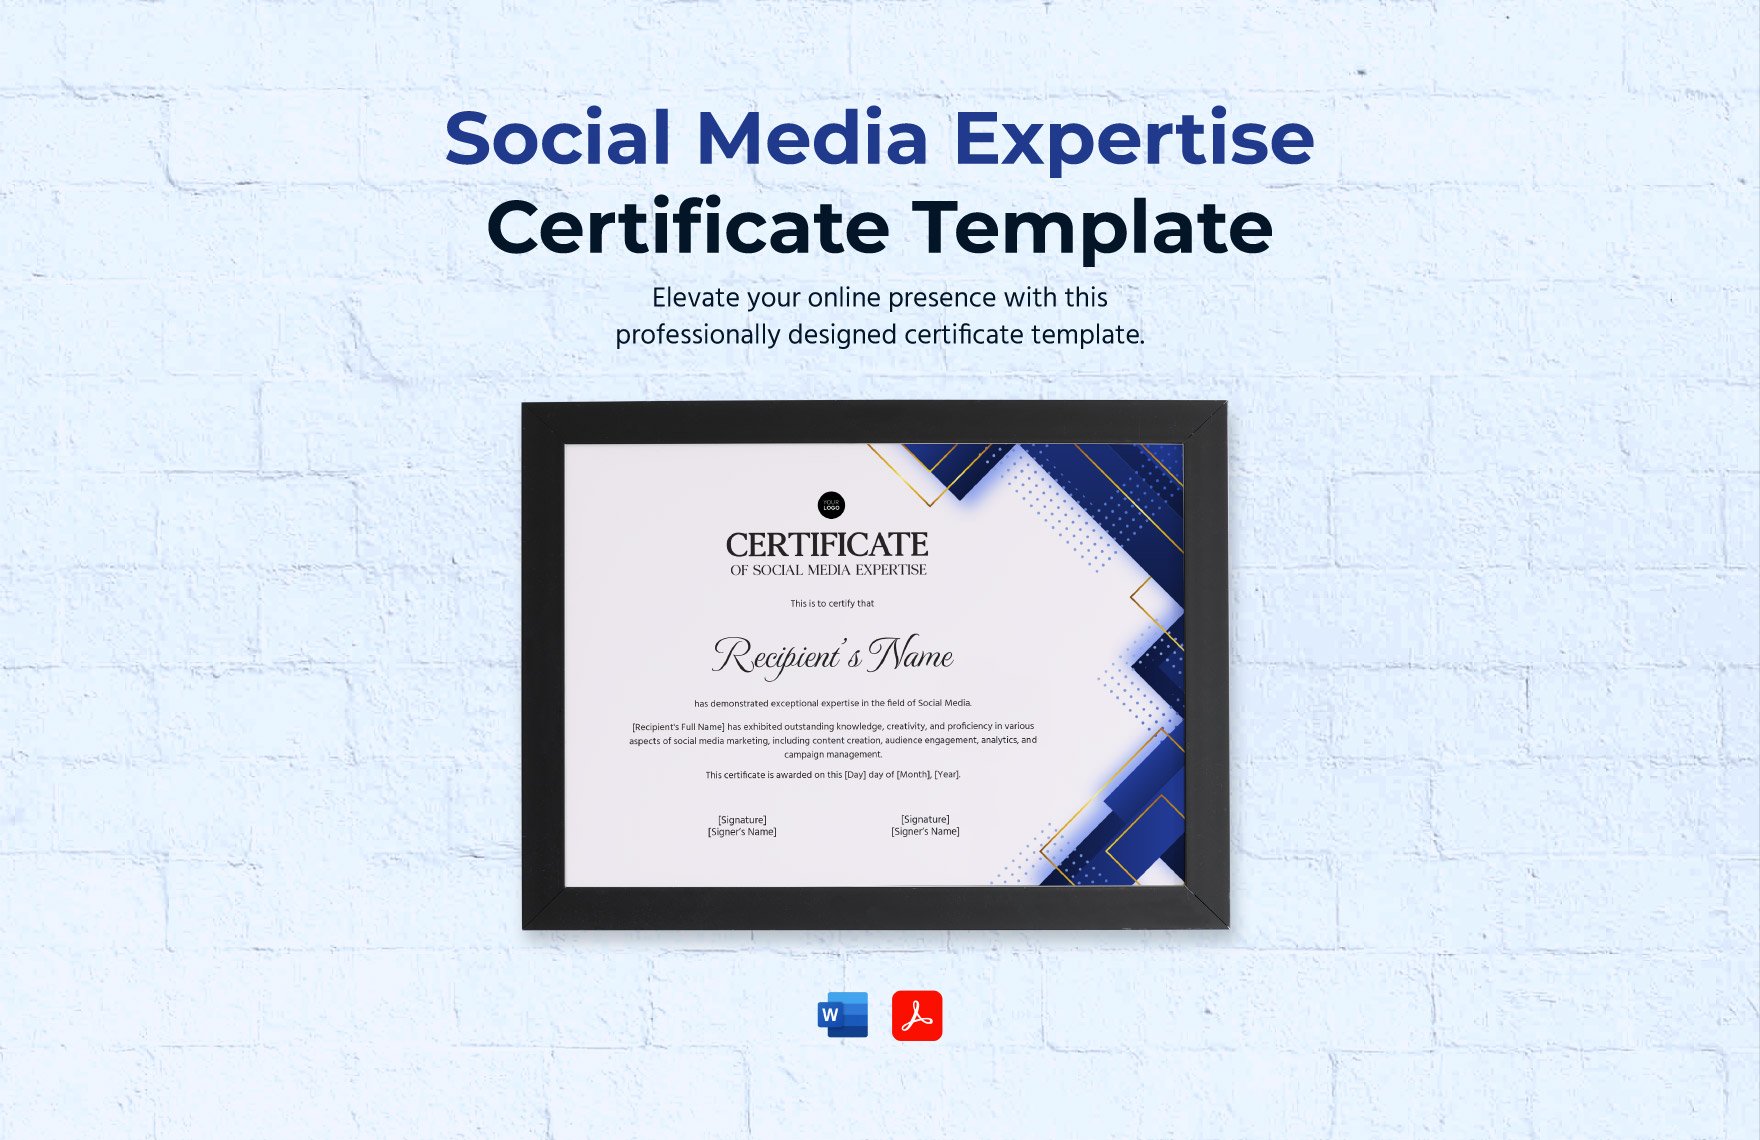 Social Media Expertise Certificate Template in Word, PDF